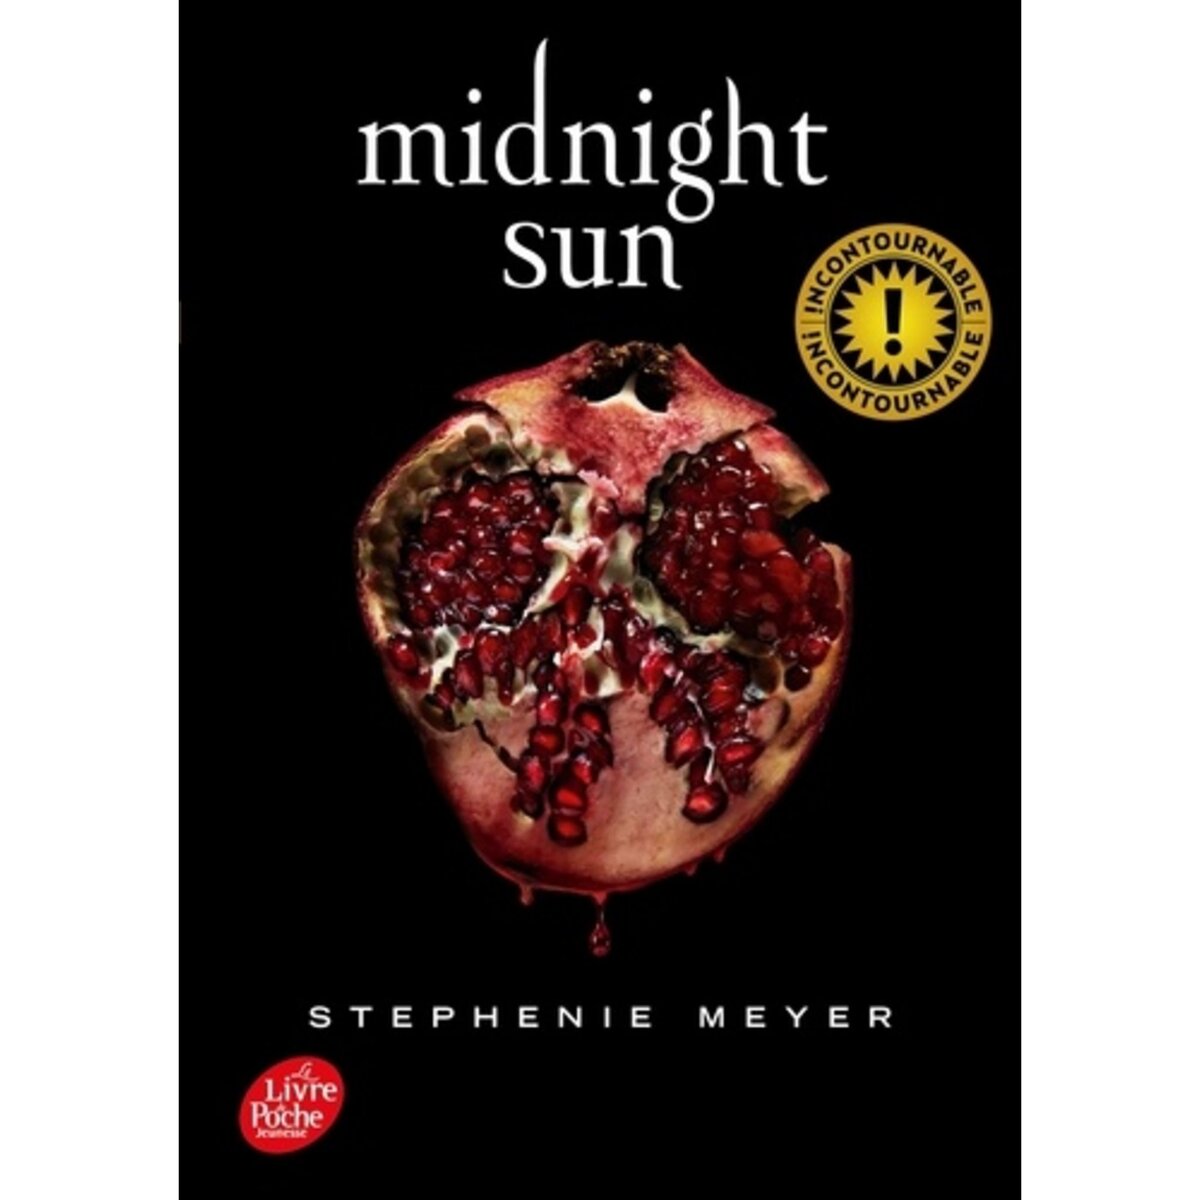  TWILIGHT TOME 5 : MIDNIGHT SUN, Meyer Stephenie